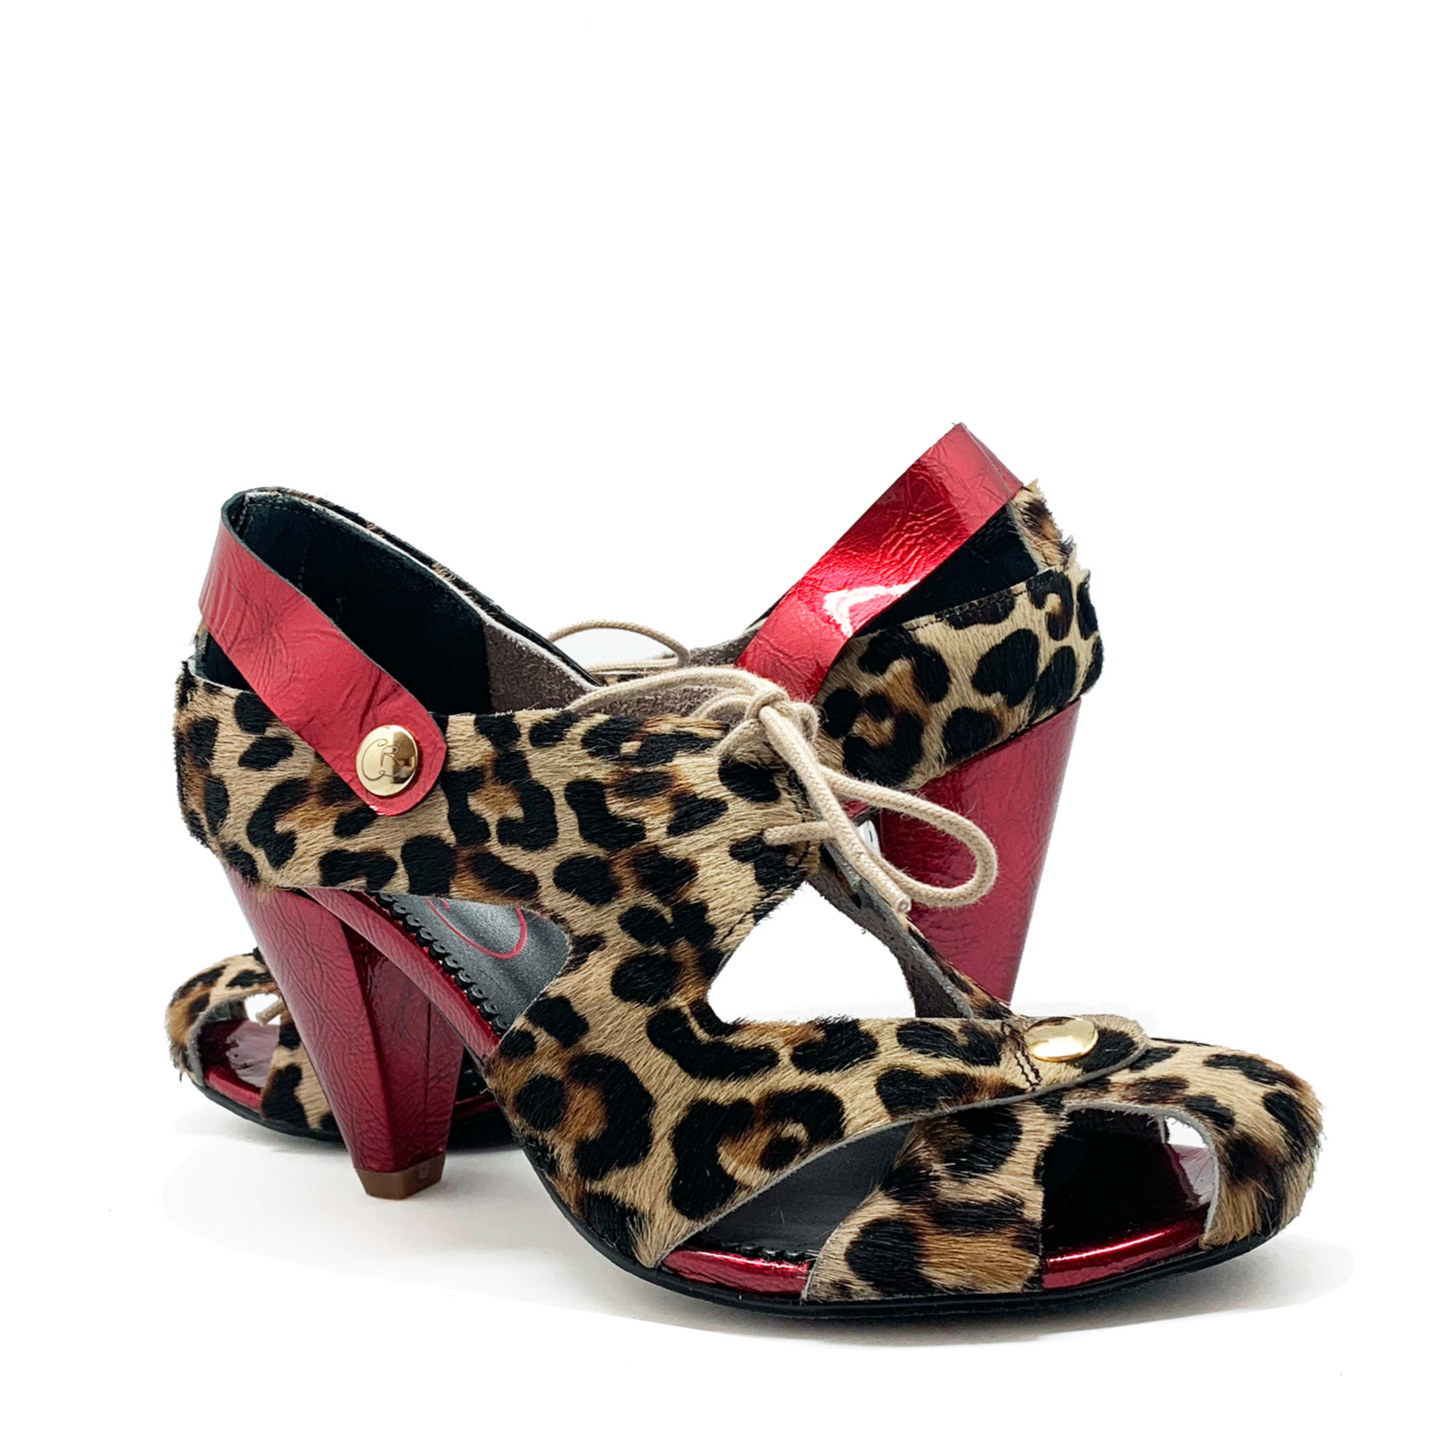 Coco-Leopard/Red heel sandal